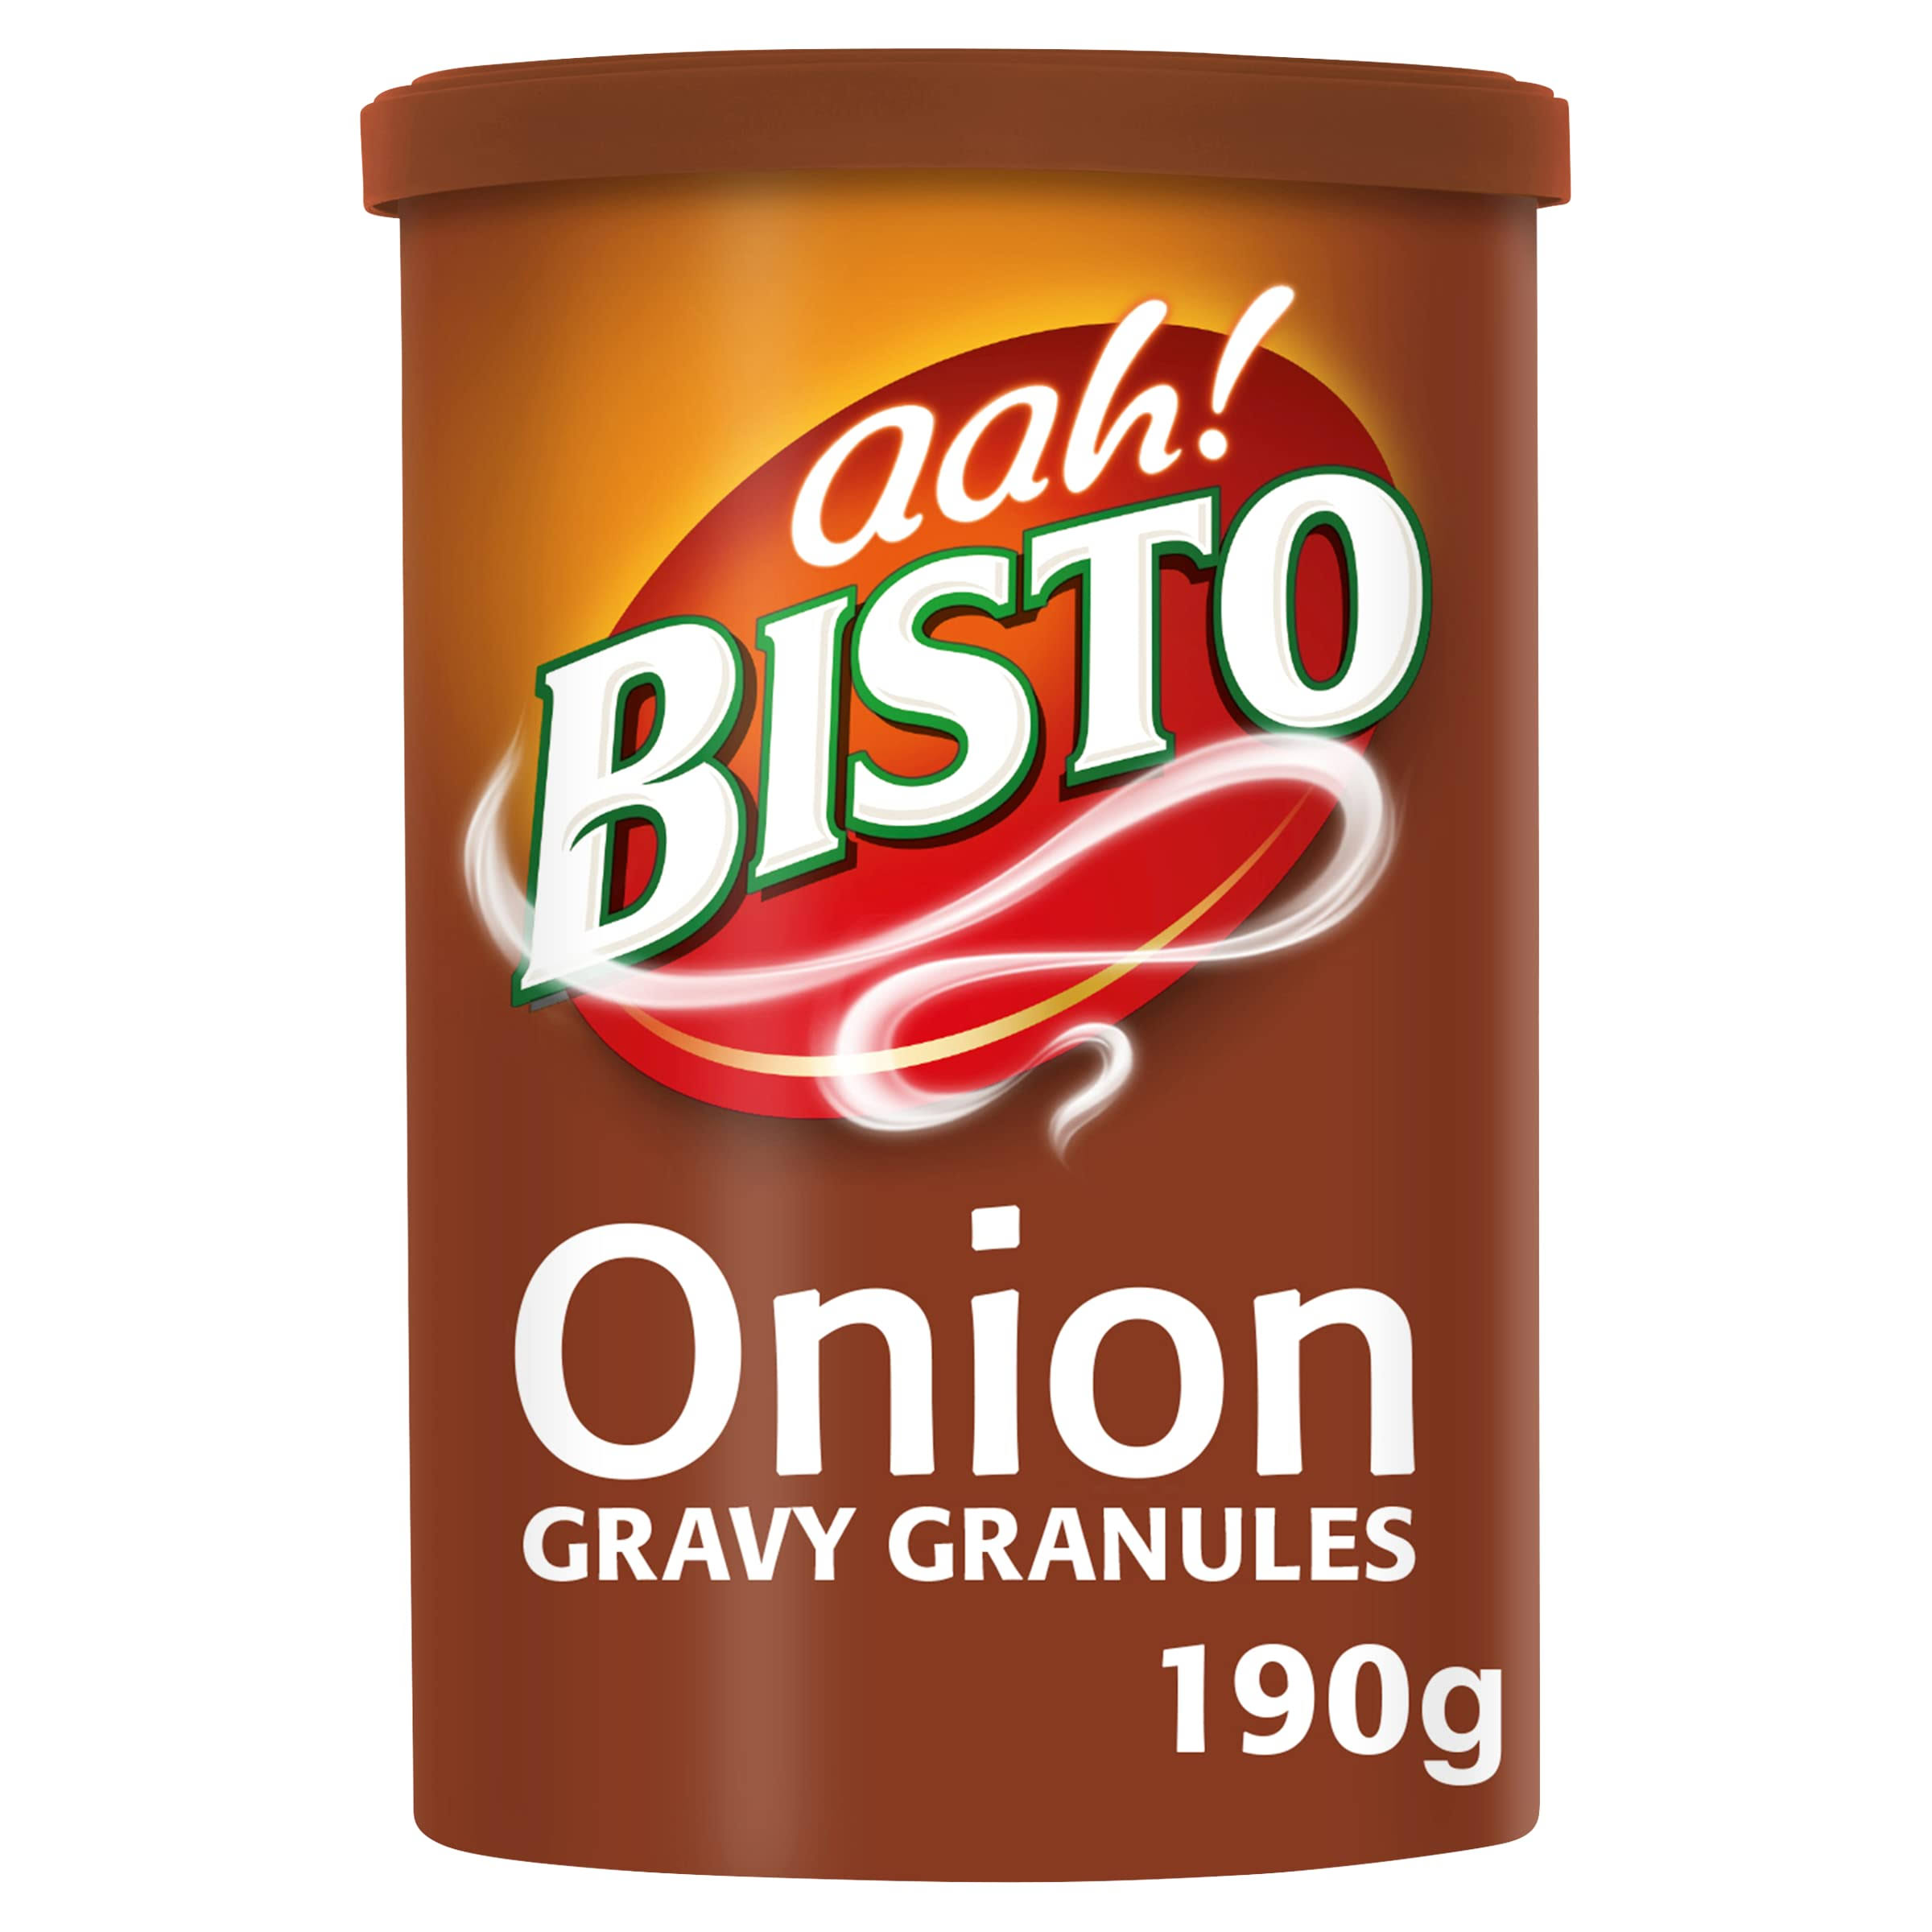 Bisto Onion Gravy Granules Delivered to Ireland